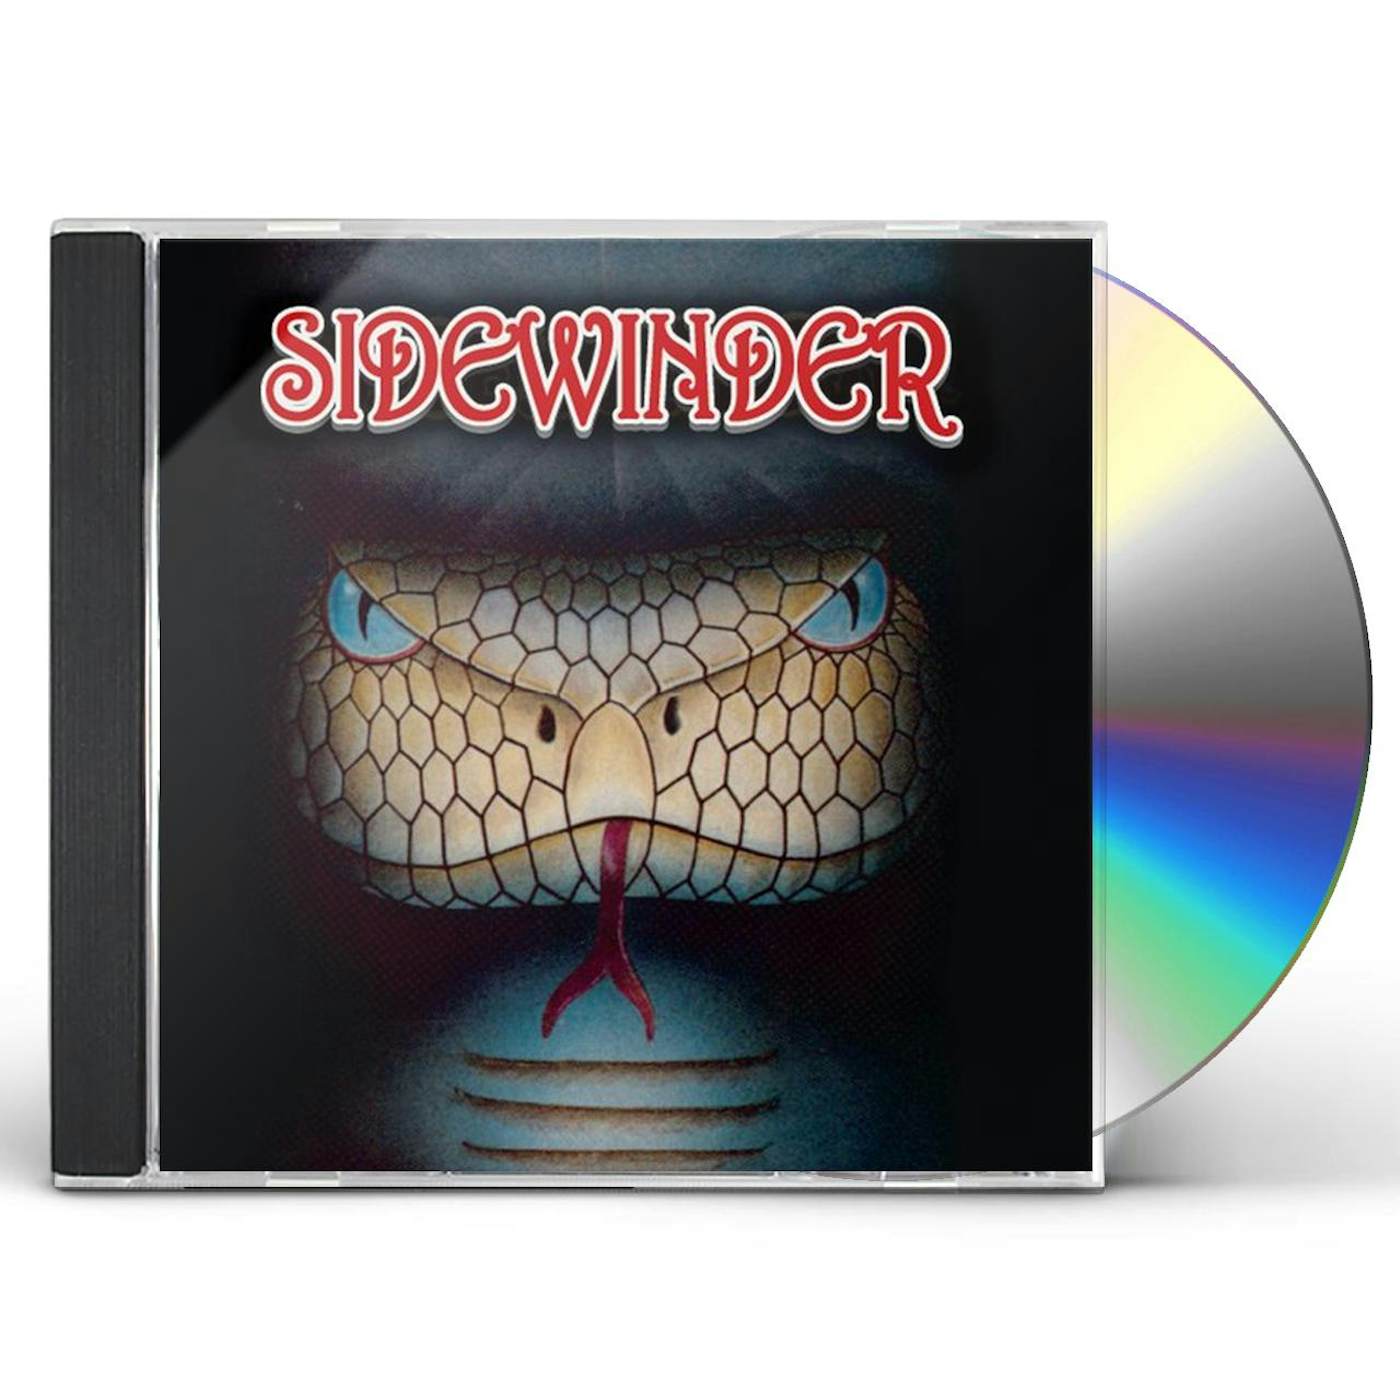 SIDEWINDER CD